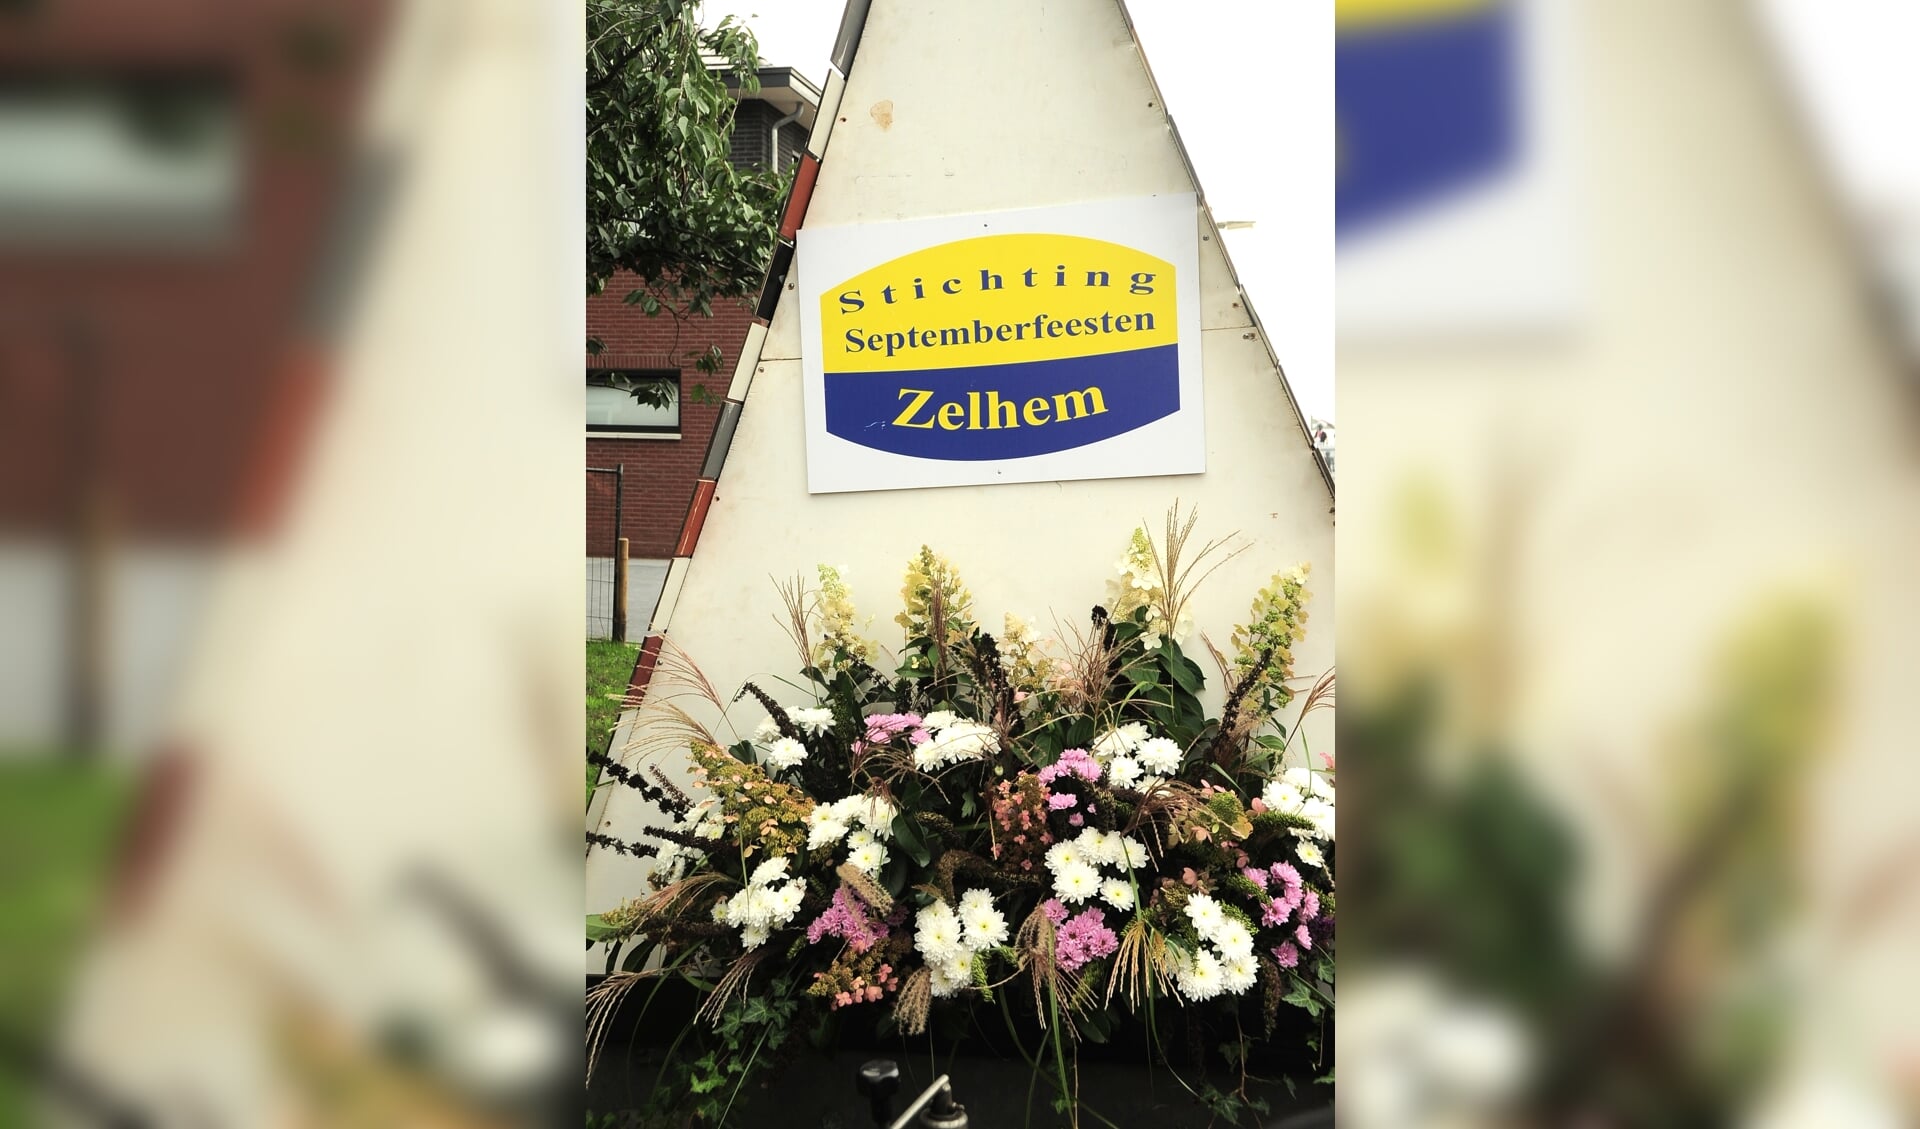 Stichting Septemberfeesten Zelhem kan het feest bescheiden vieren. Foto: Achterhoekfoto.nl